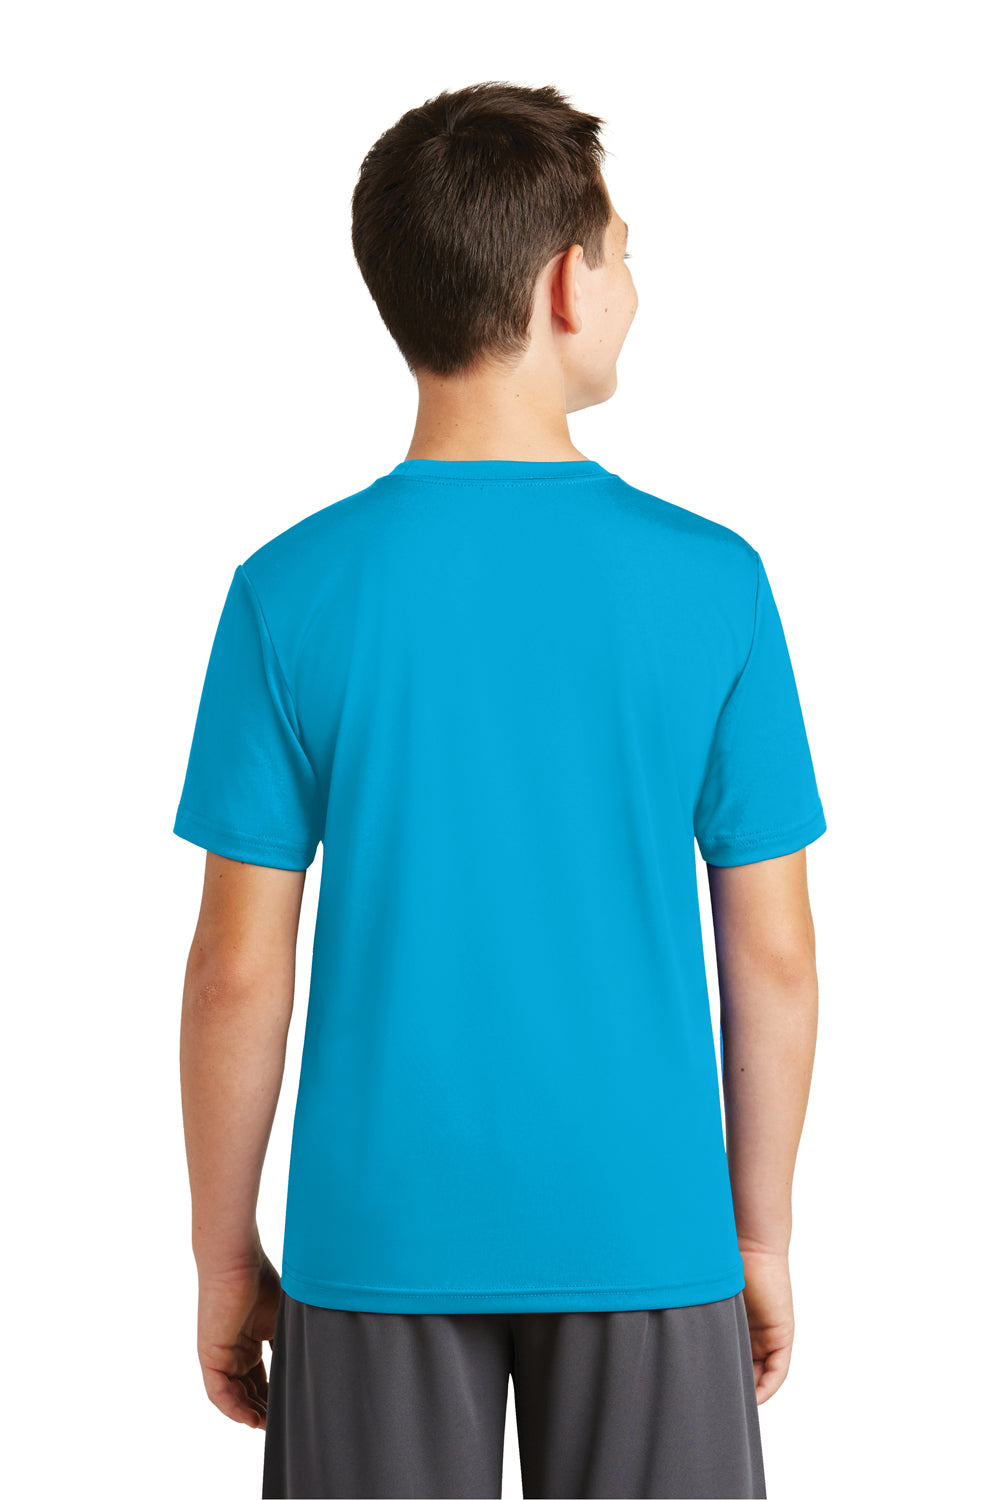 Sport-Tek YST320 Youth Tough Moisture Wicking Short Sleeve Crewneck T-Shirt Atomic Blue Back